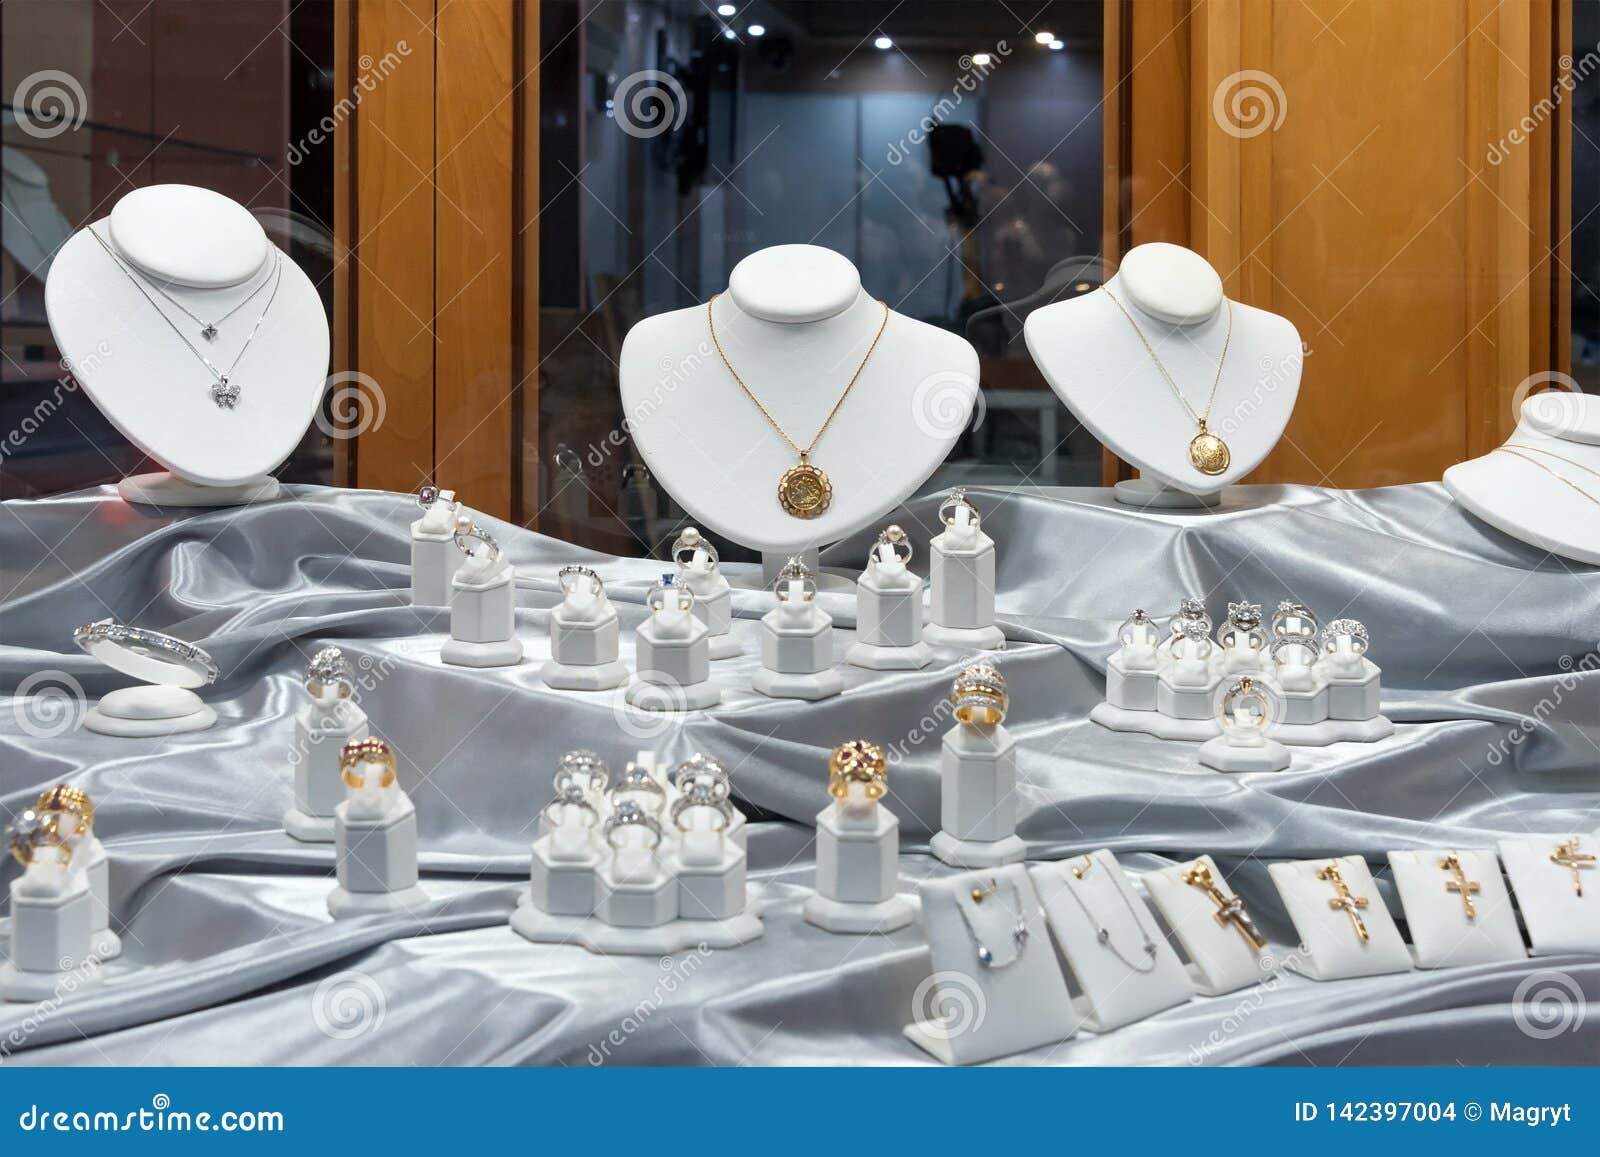 jewelry-diamond-rings-necklaces-show-luxury-retail-store-window-display-showcase-142397004.jpg